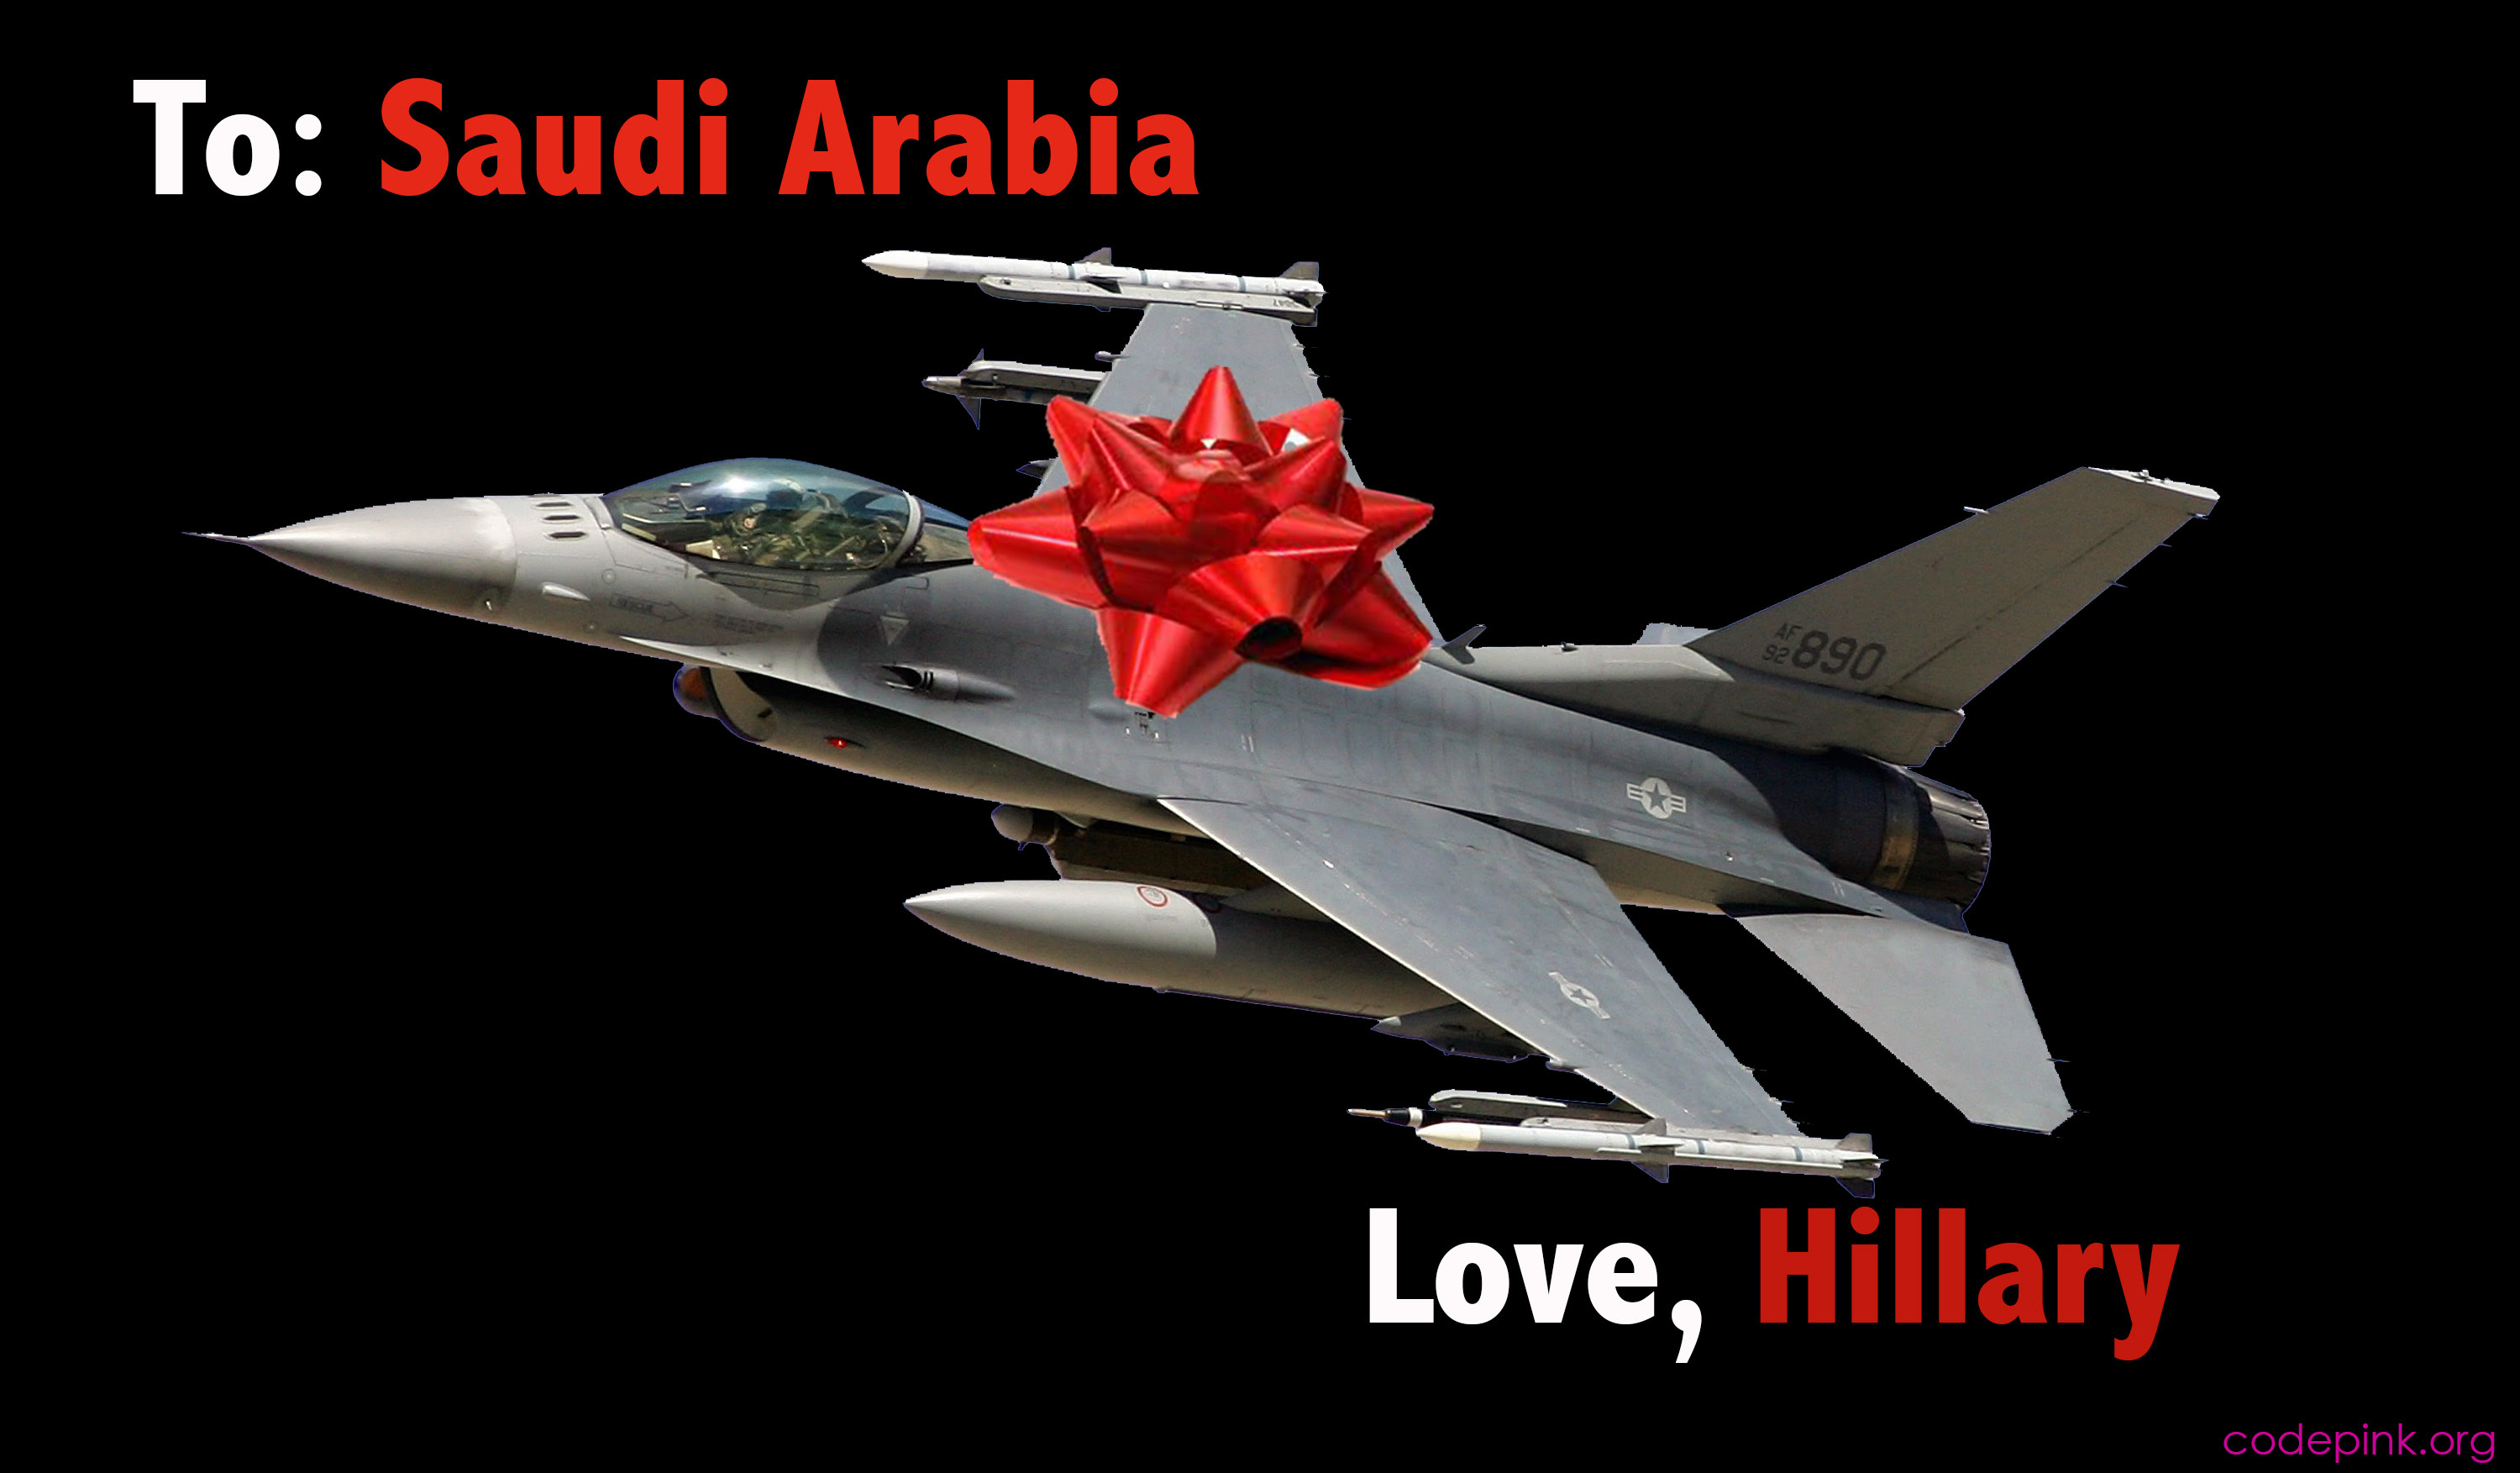 Hillary Clinton’s State Department Armed Saudi Arabia to the Teeth